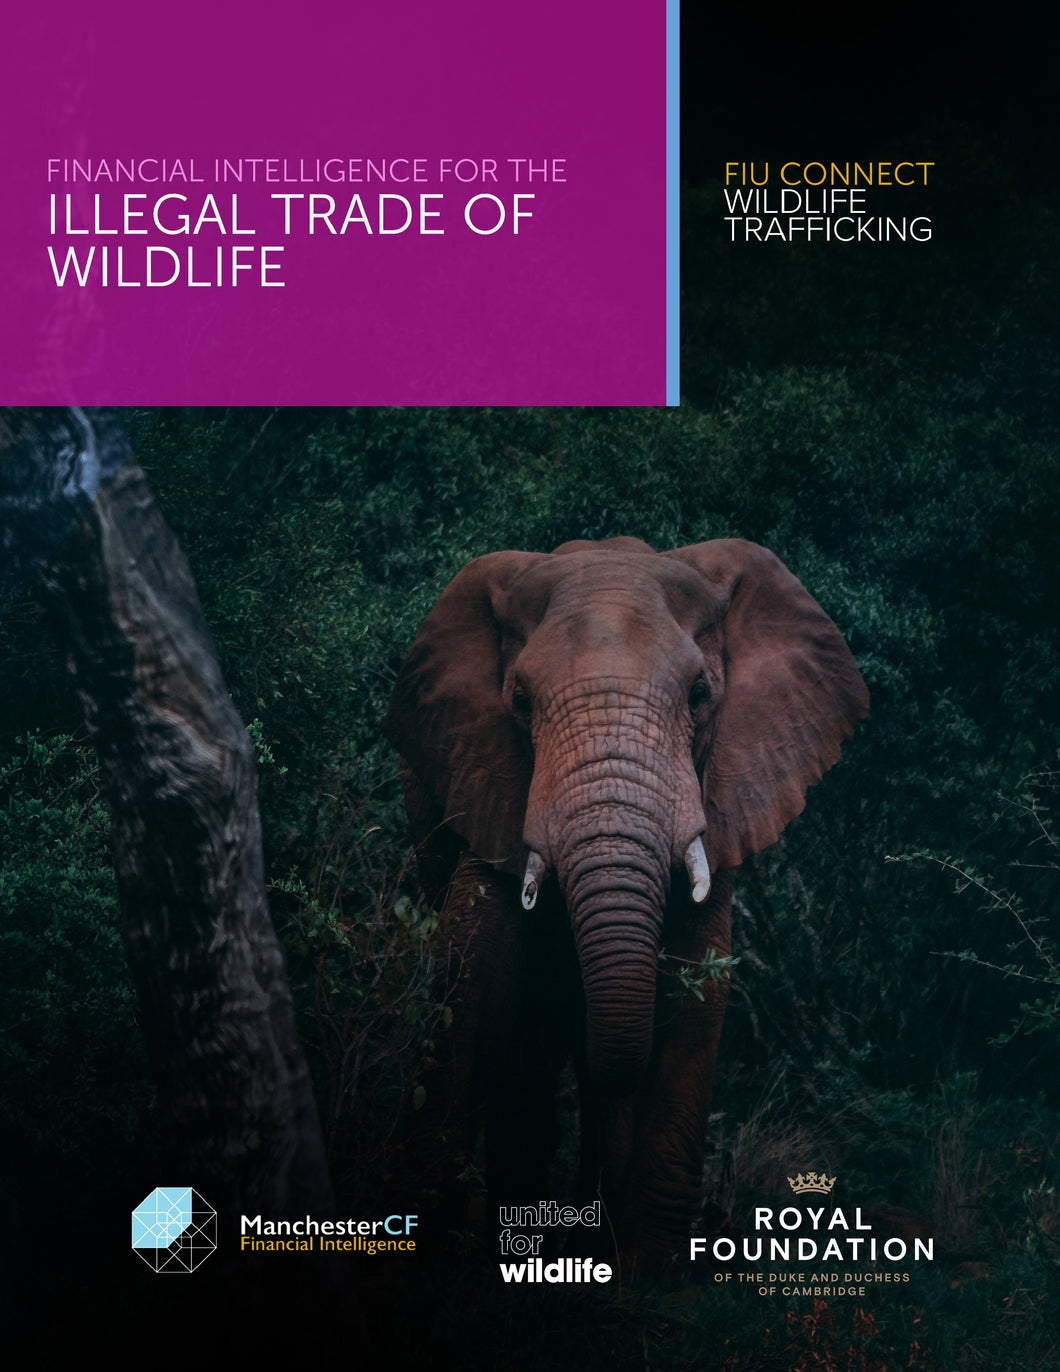 FIU Connect (Wildlife Trafficking)